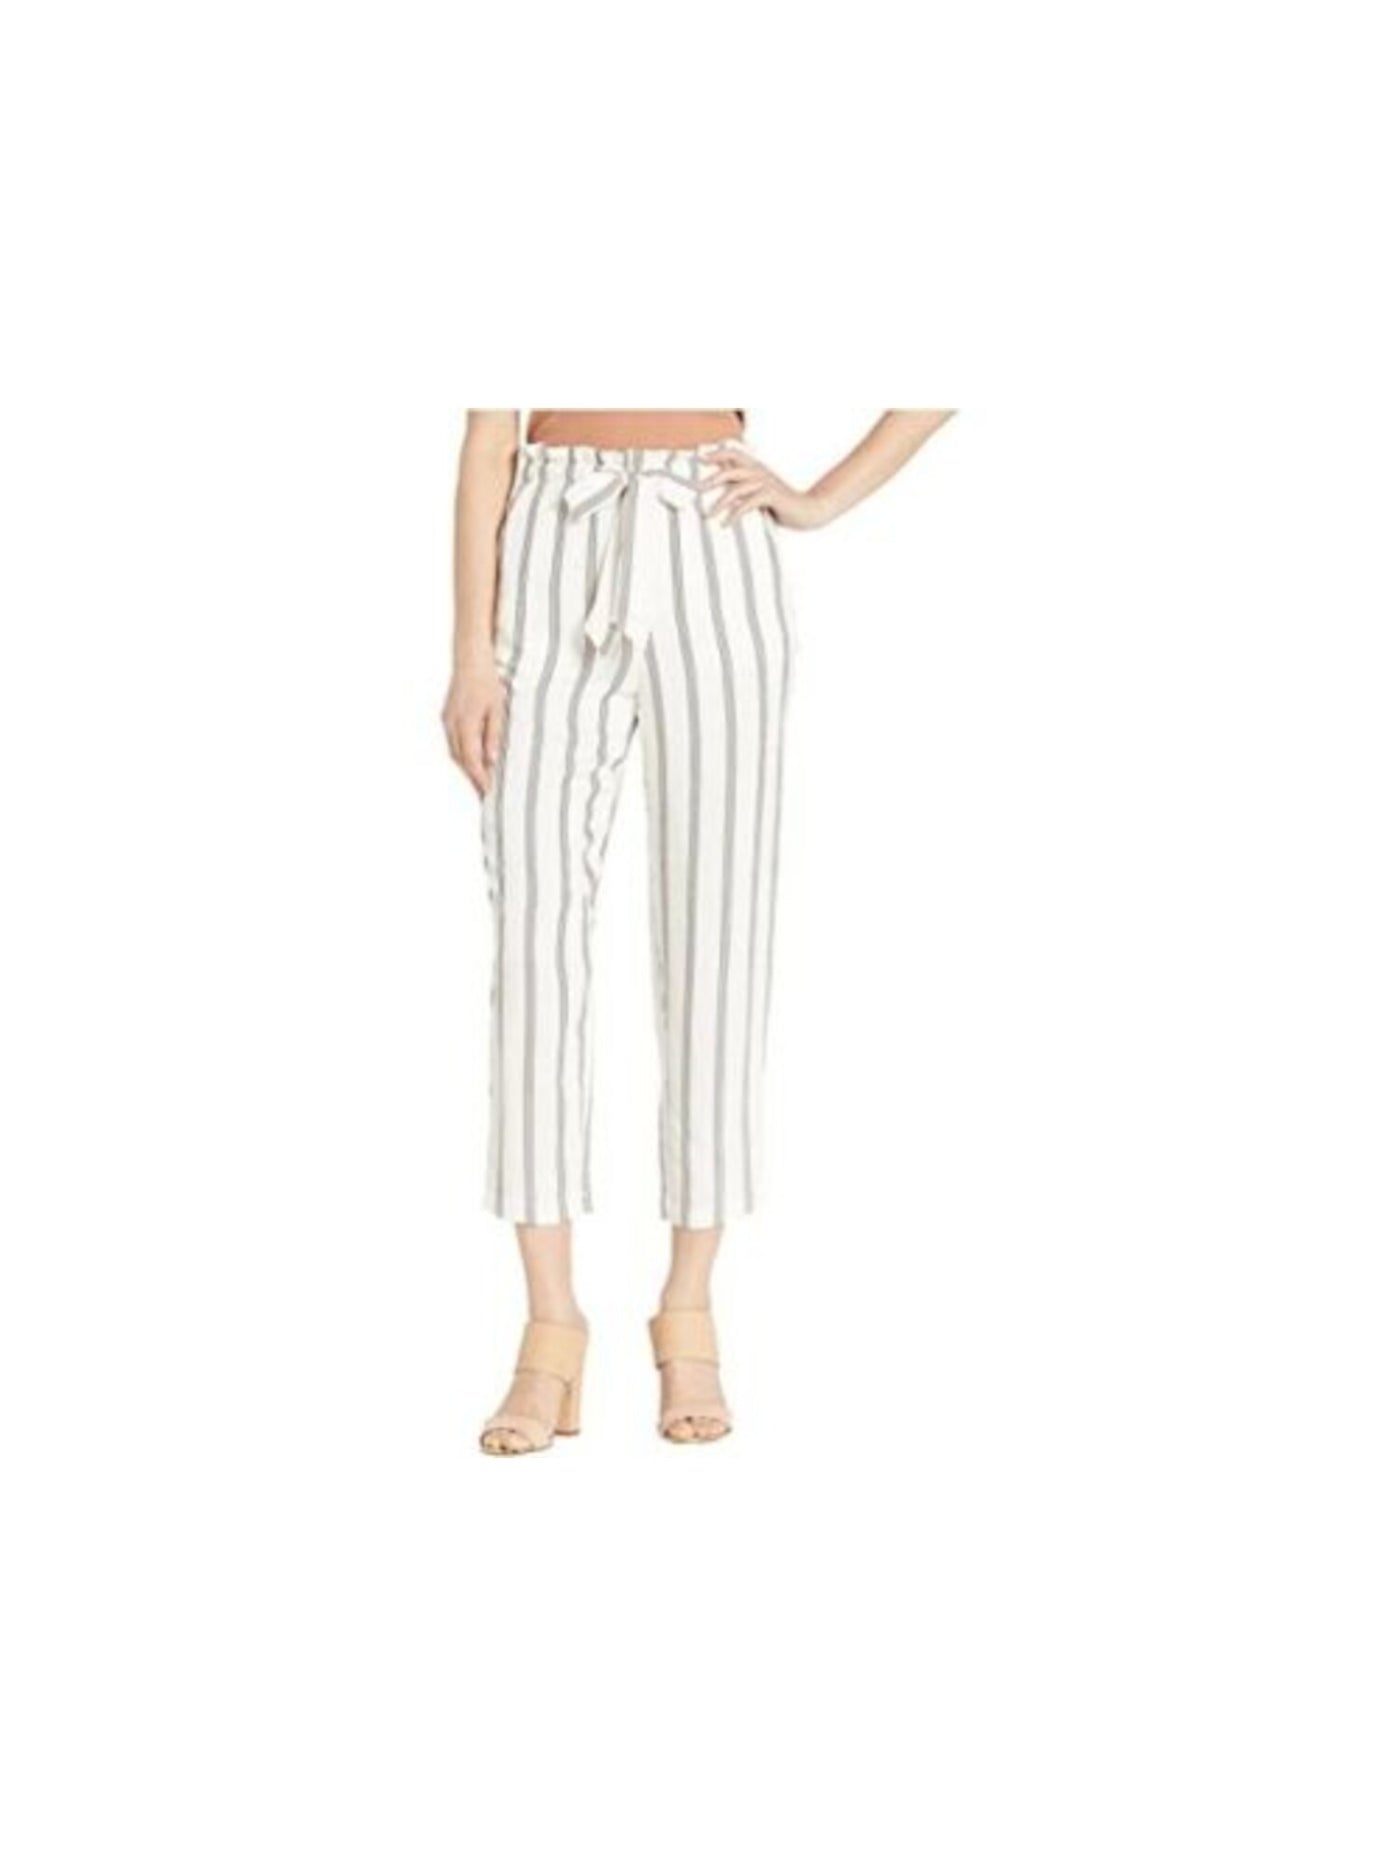 JOIE Womens Ivory Striped Pants Size: XS